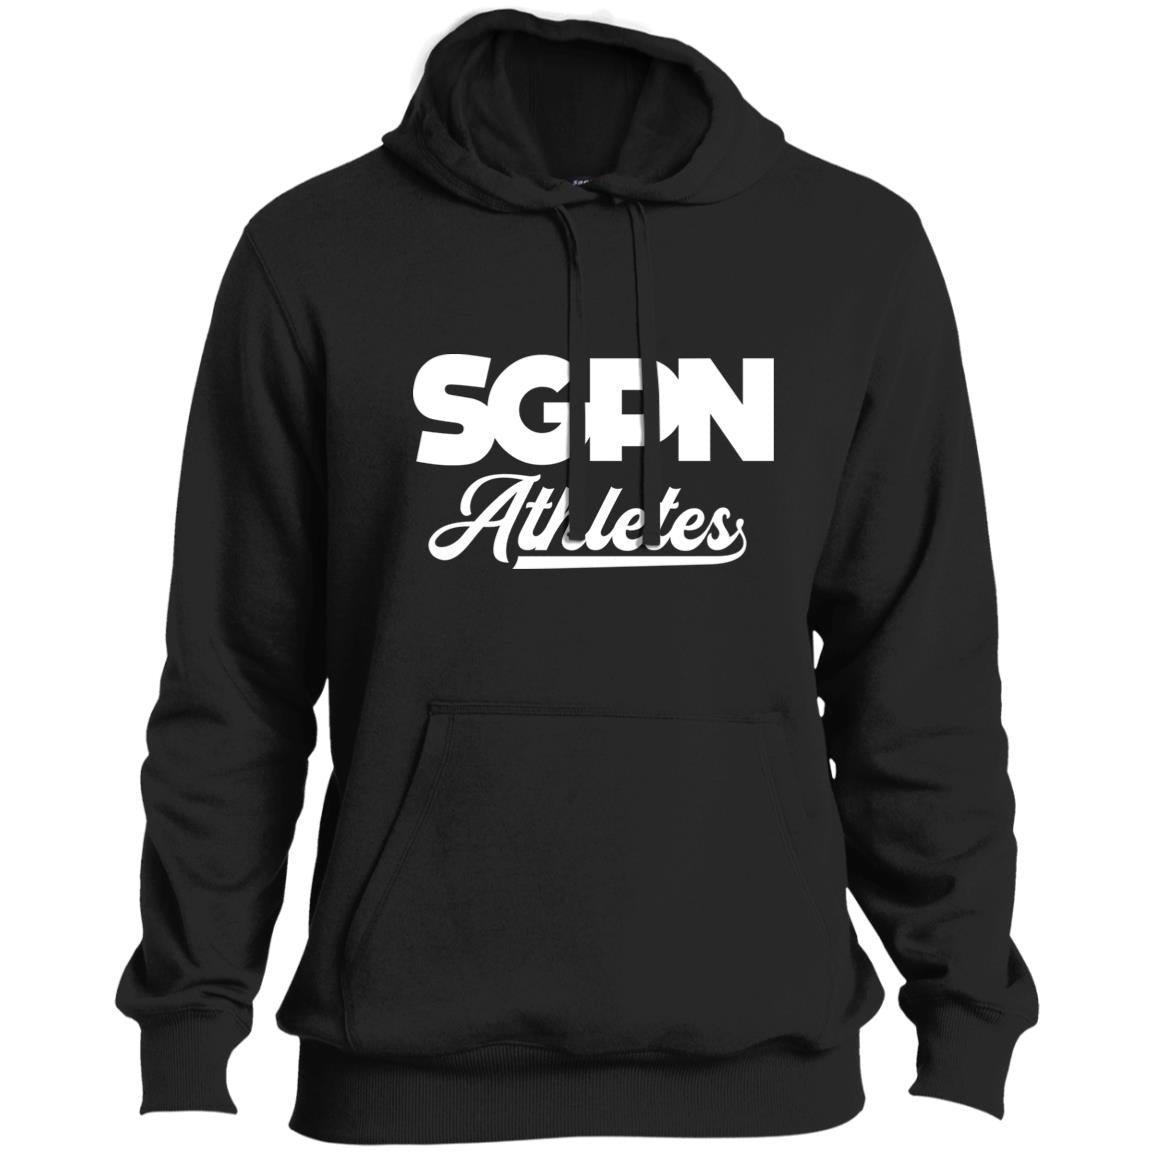 SGPN Athletes Pullover Hoodie (White Logo)